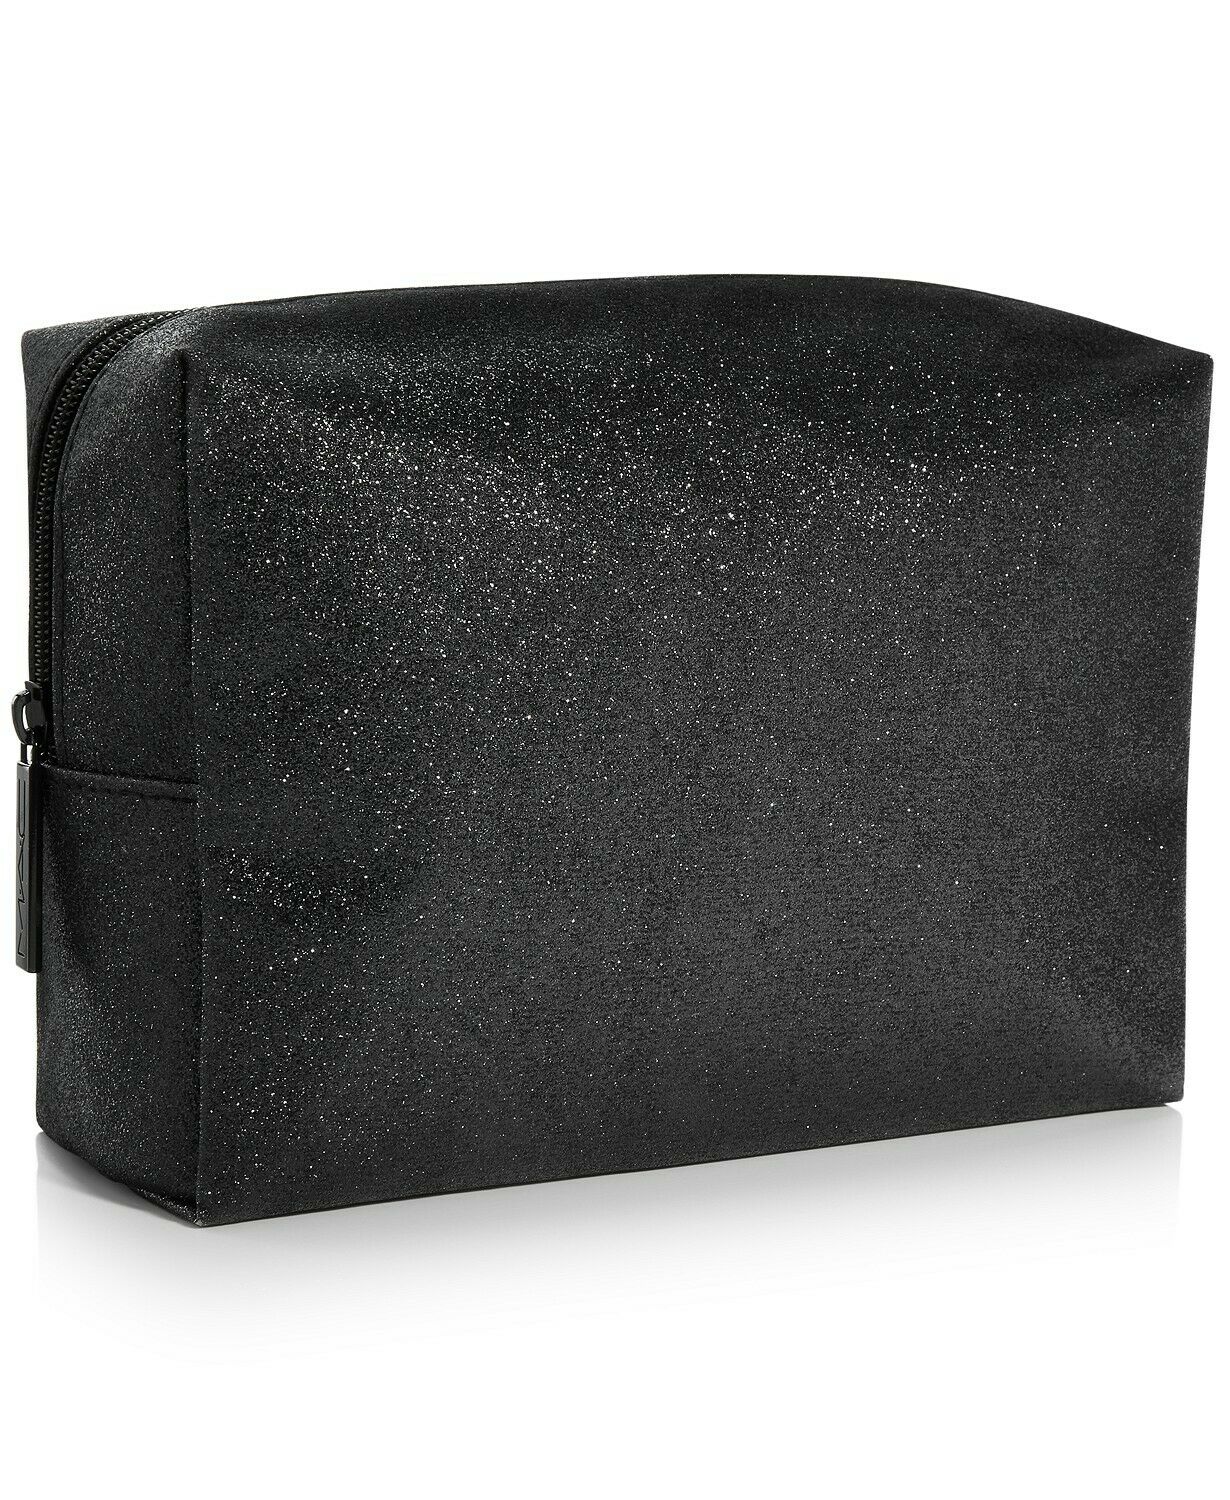 Mac Cosmetics Black Glitter Makeup Bag